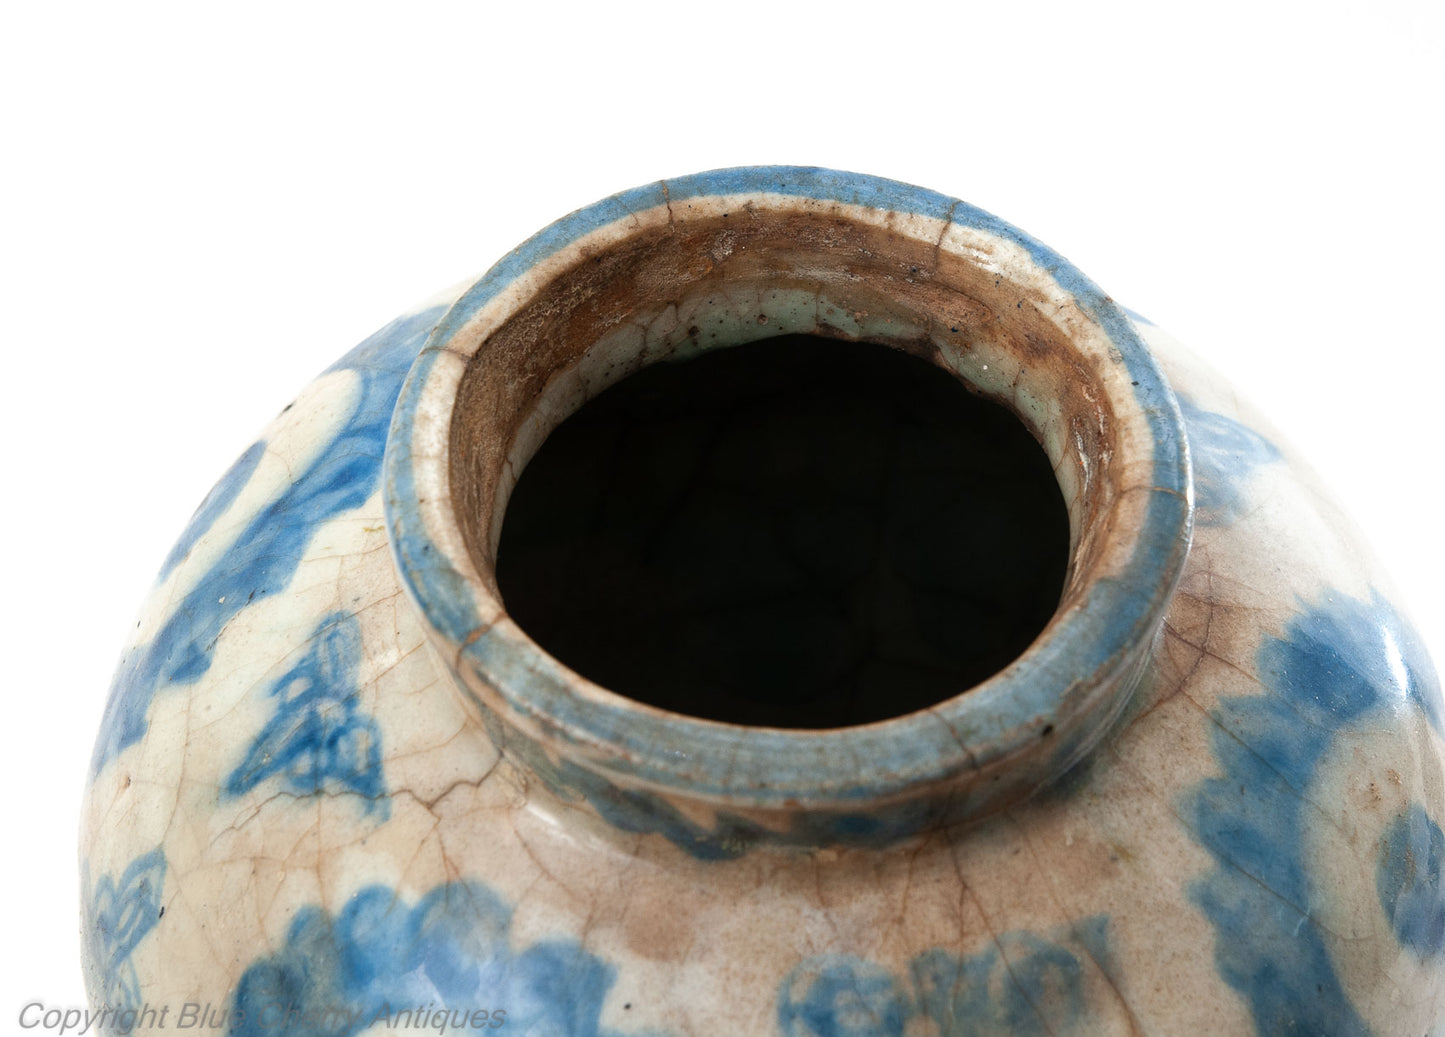 Mamluk or Safavid Islamic Antique Pottery Middle Eastern Fritware Jar - Blue Eye Design (Code 1828)